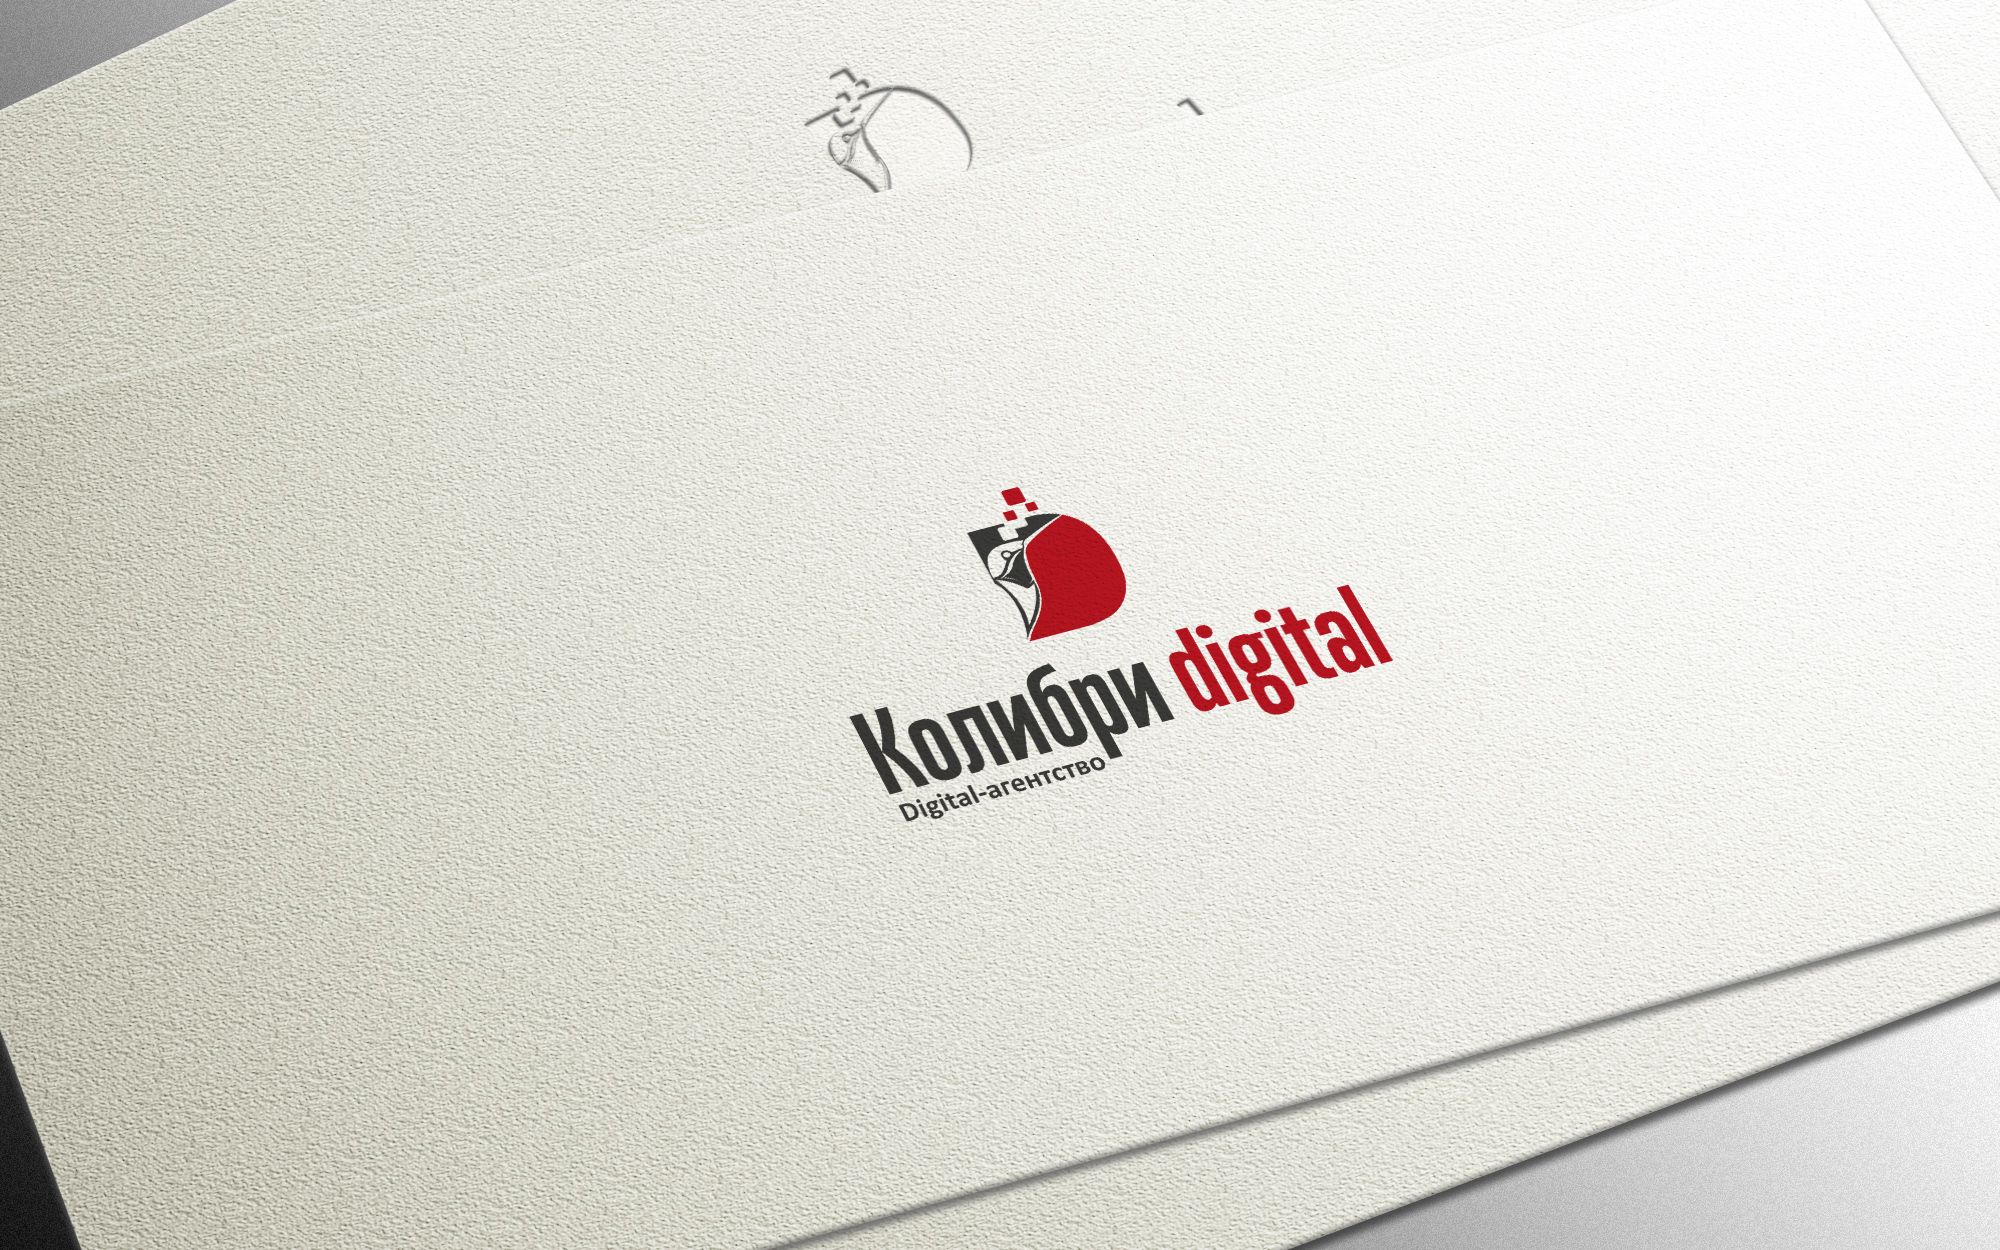 Логотип для Колибри digital - дизайнер Gas-Min